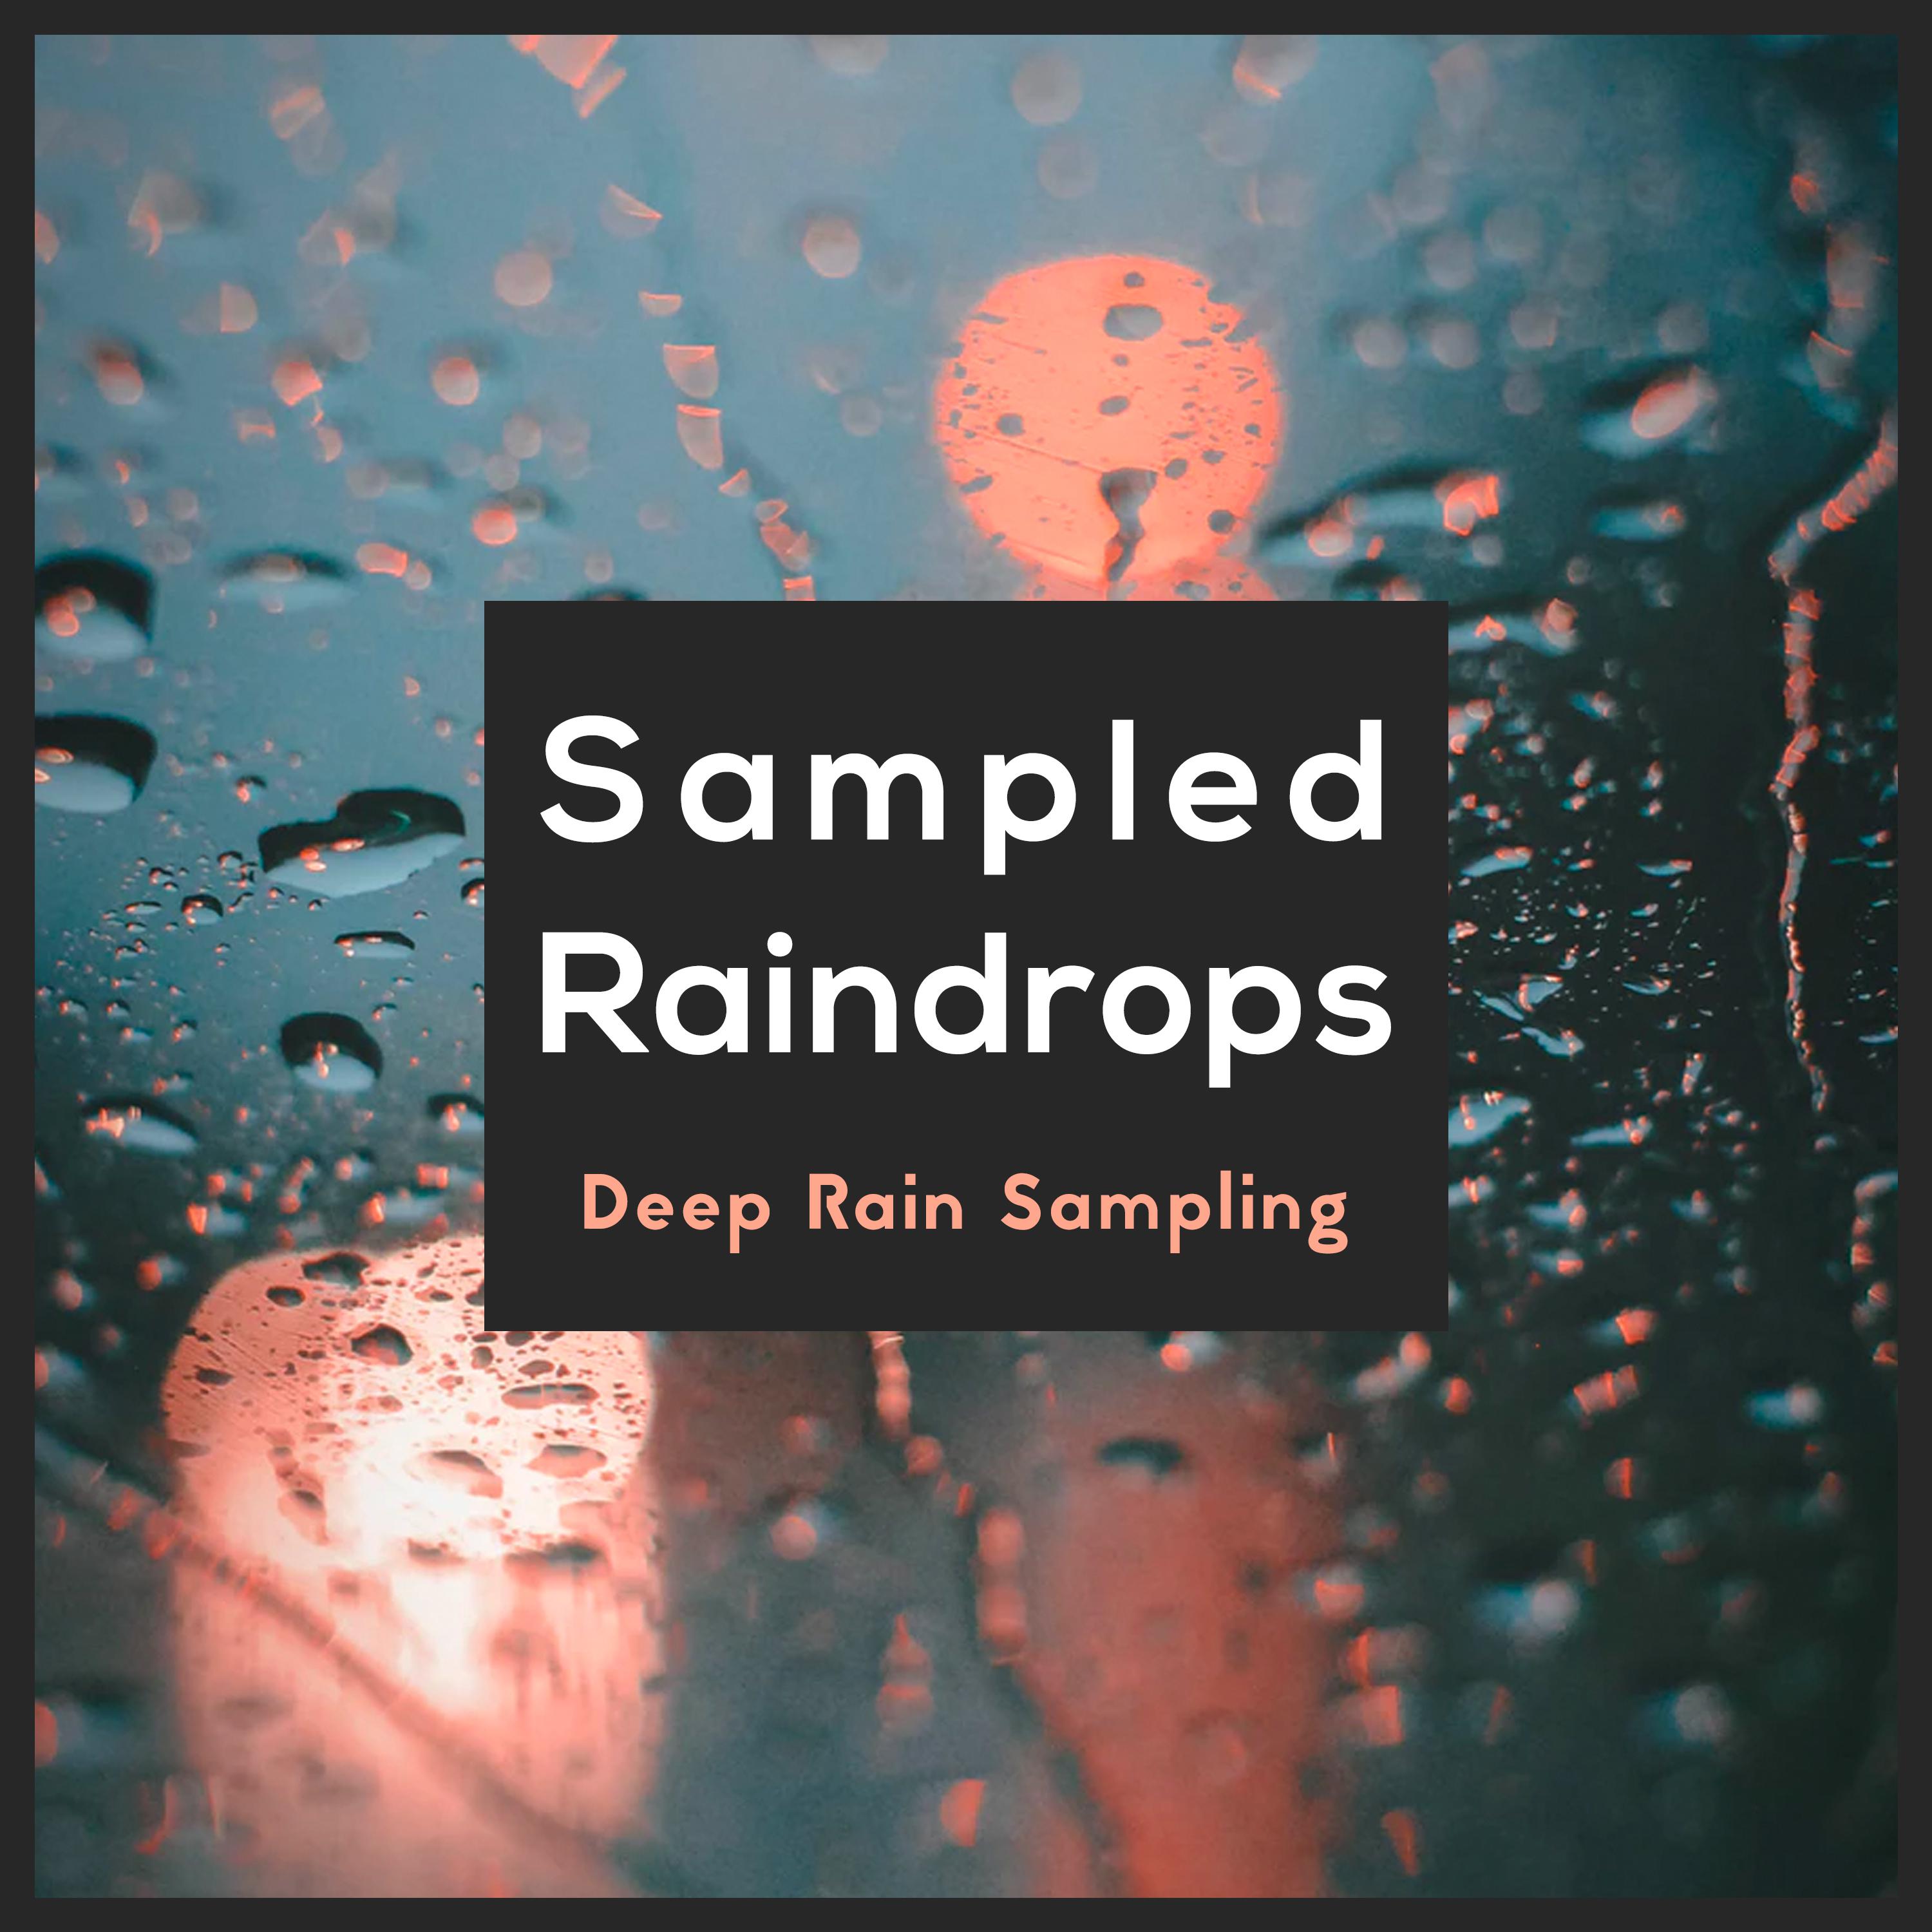 Sampled Raindrops